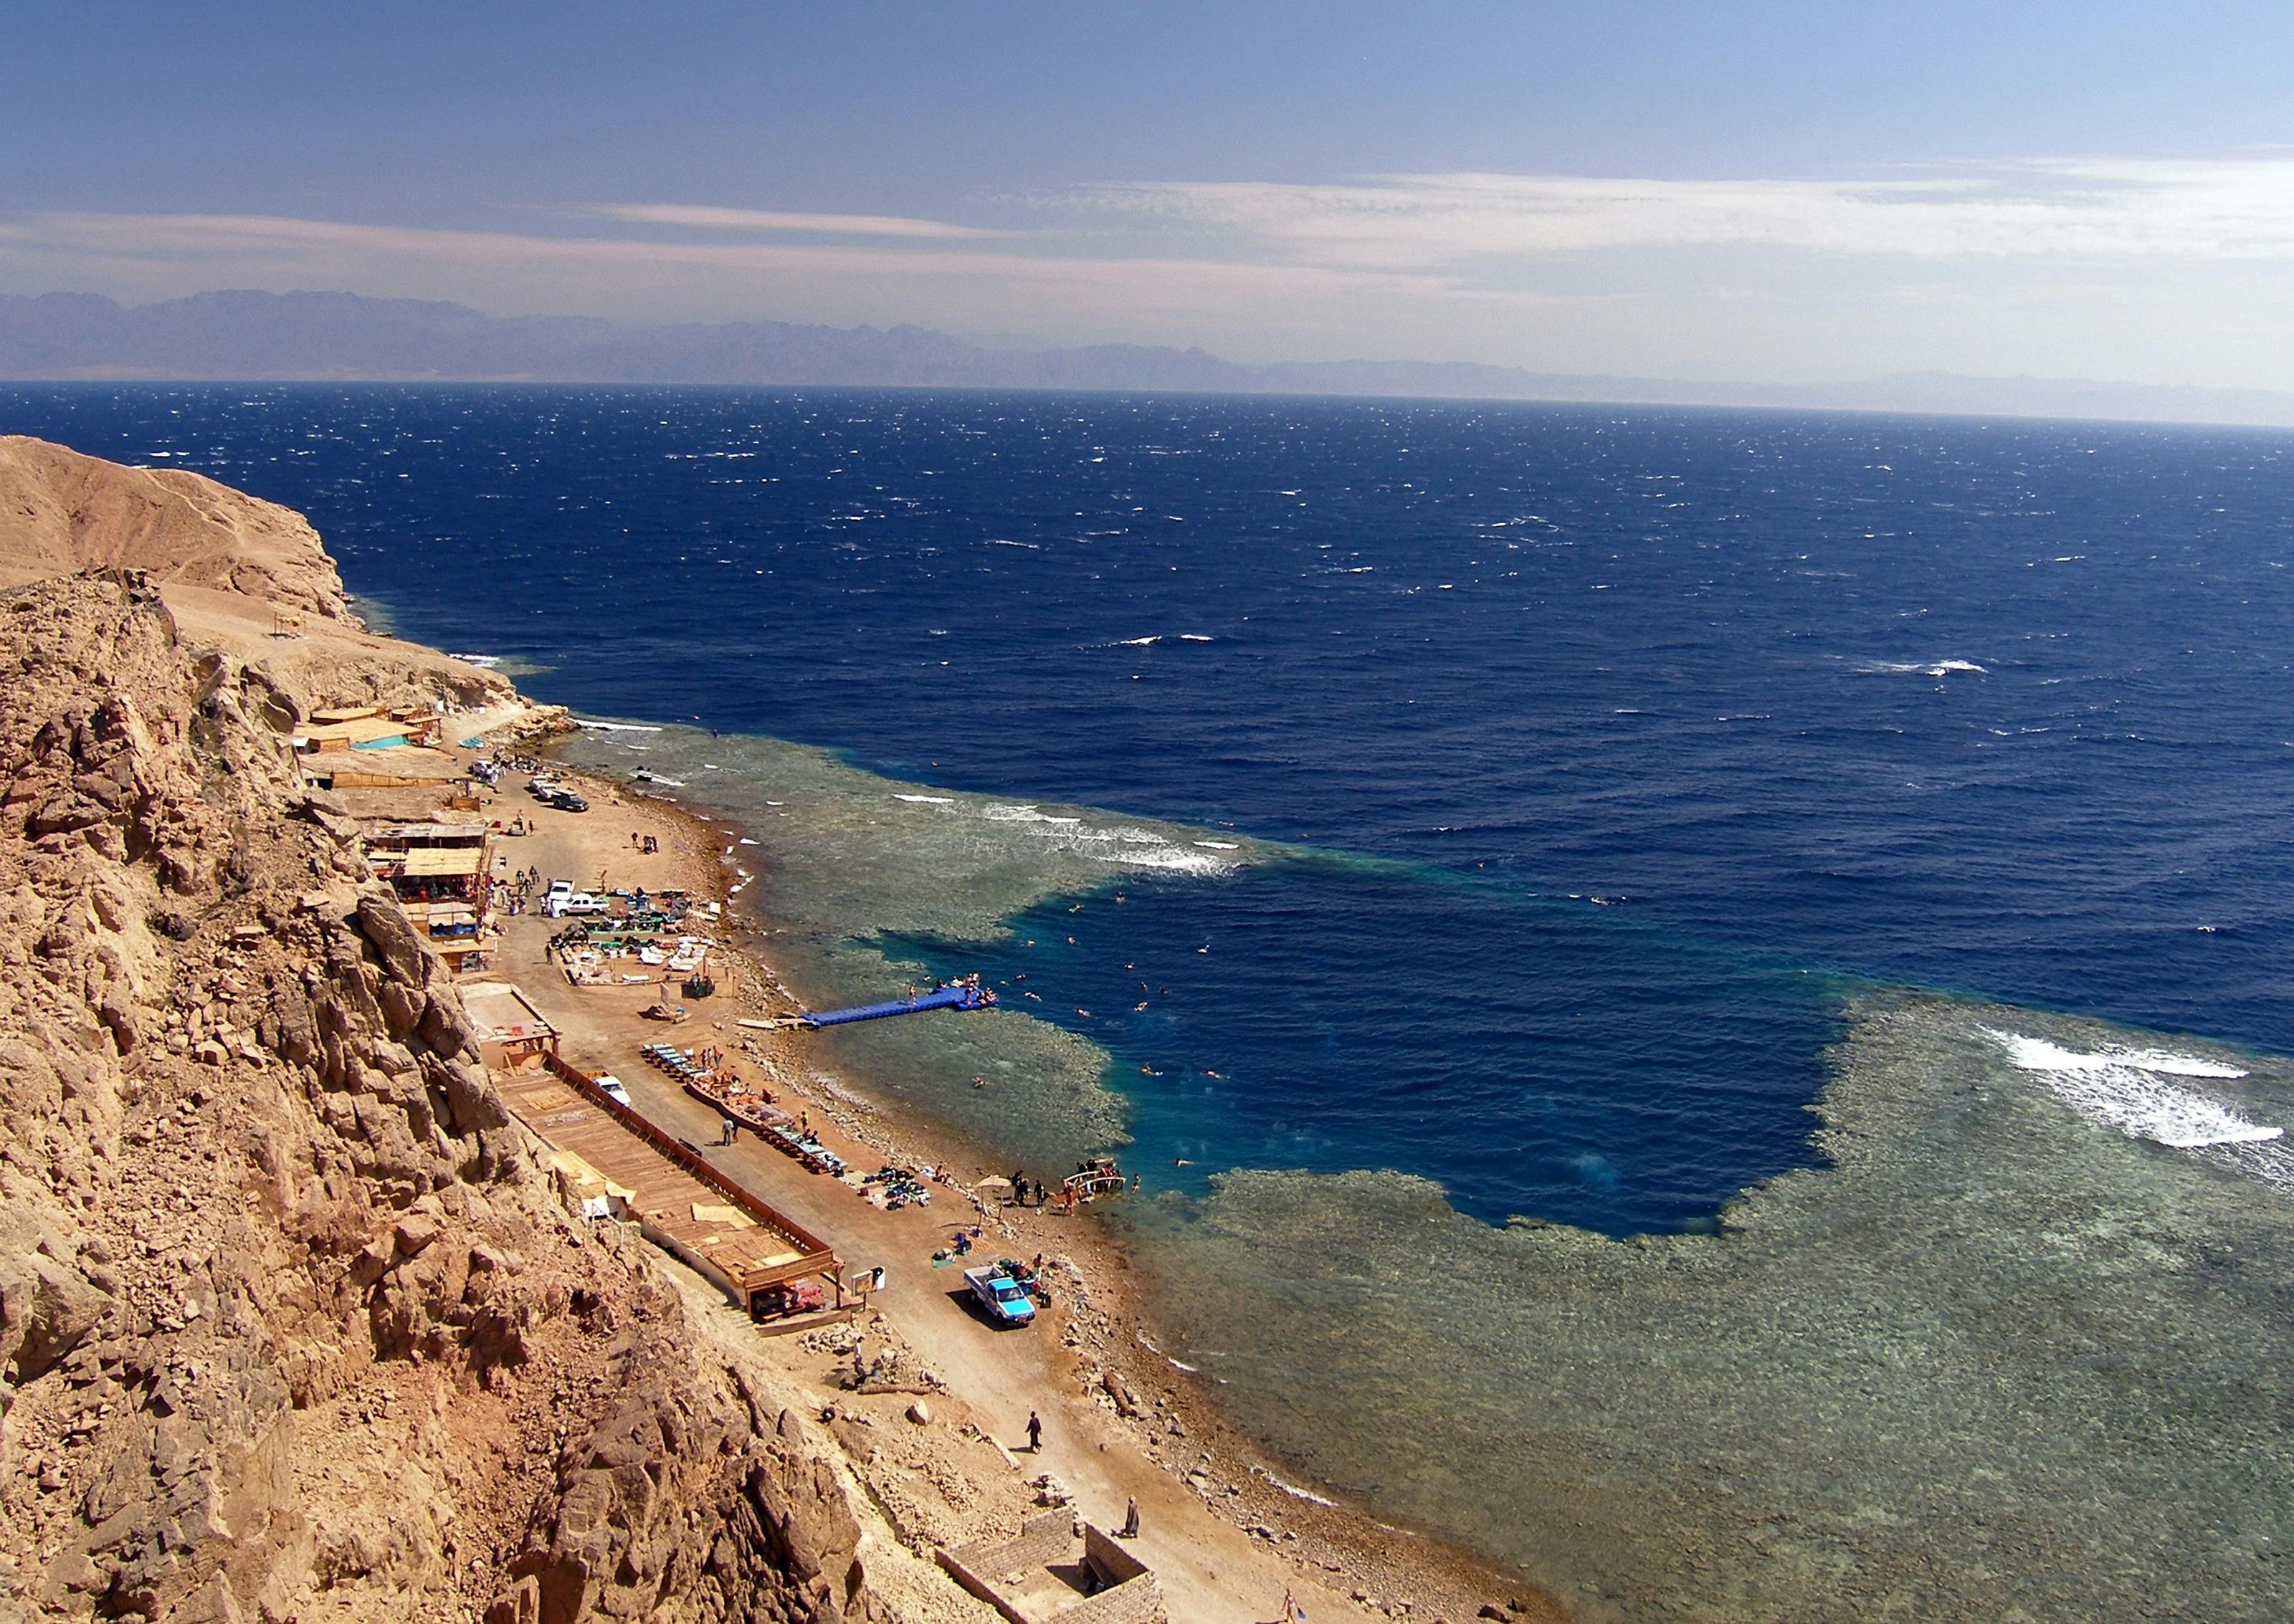 Blue Hole Snorkeling, 4x4 safari and Dahab tour from Sharm El Sheikh ...